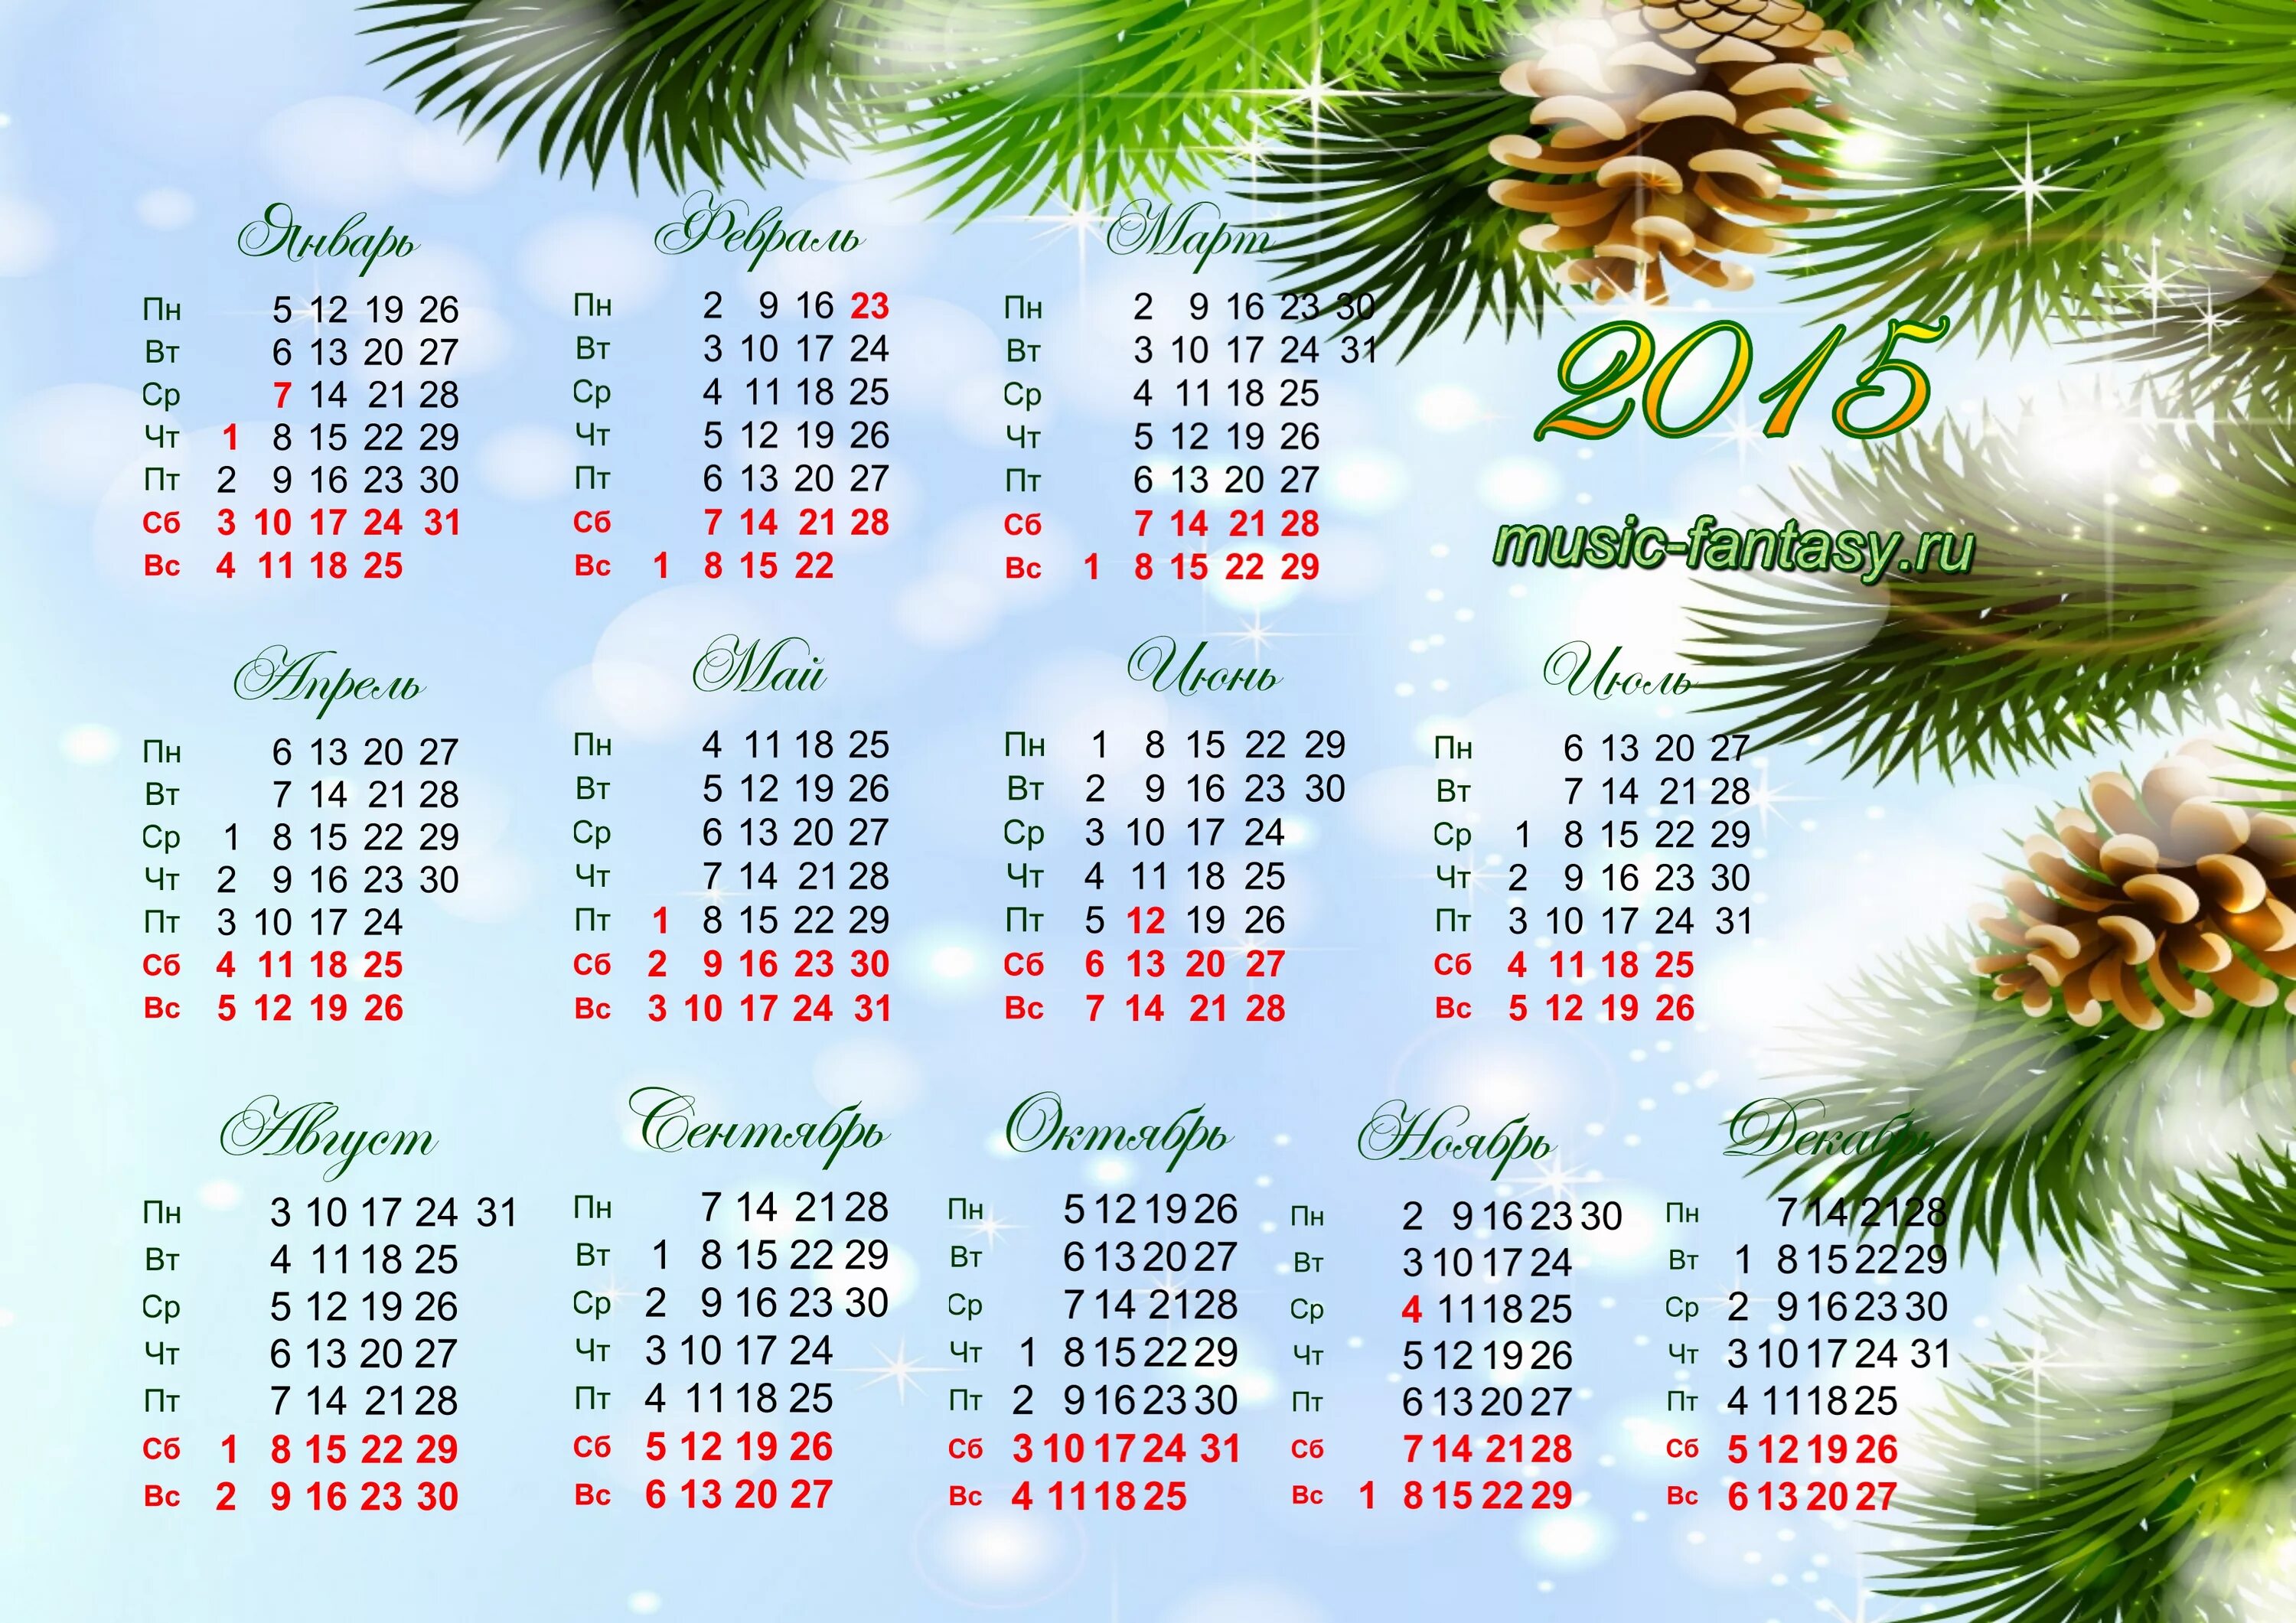 Полный календарь года. Календарь 2015. Календарь на 2015 год. Календарь 2015г. Календарь 2015 года по месяцам.